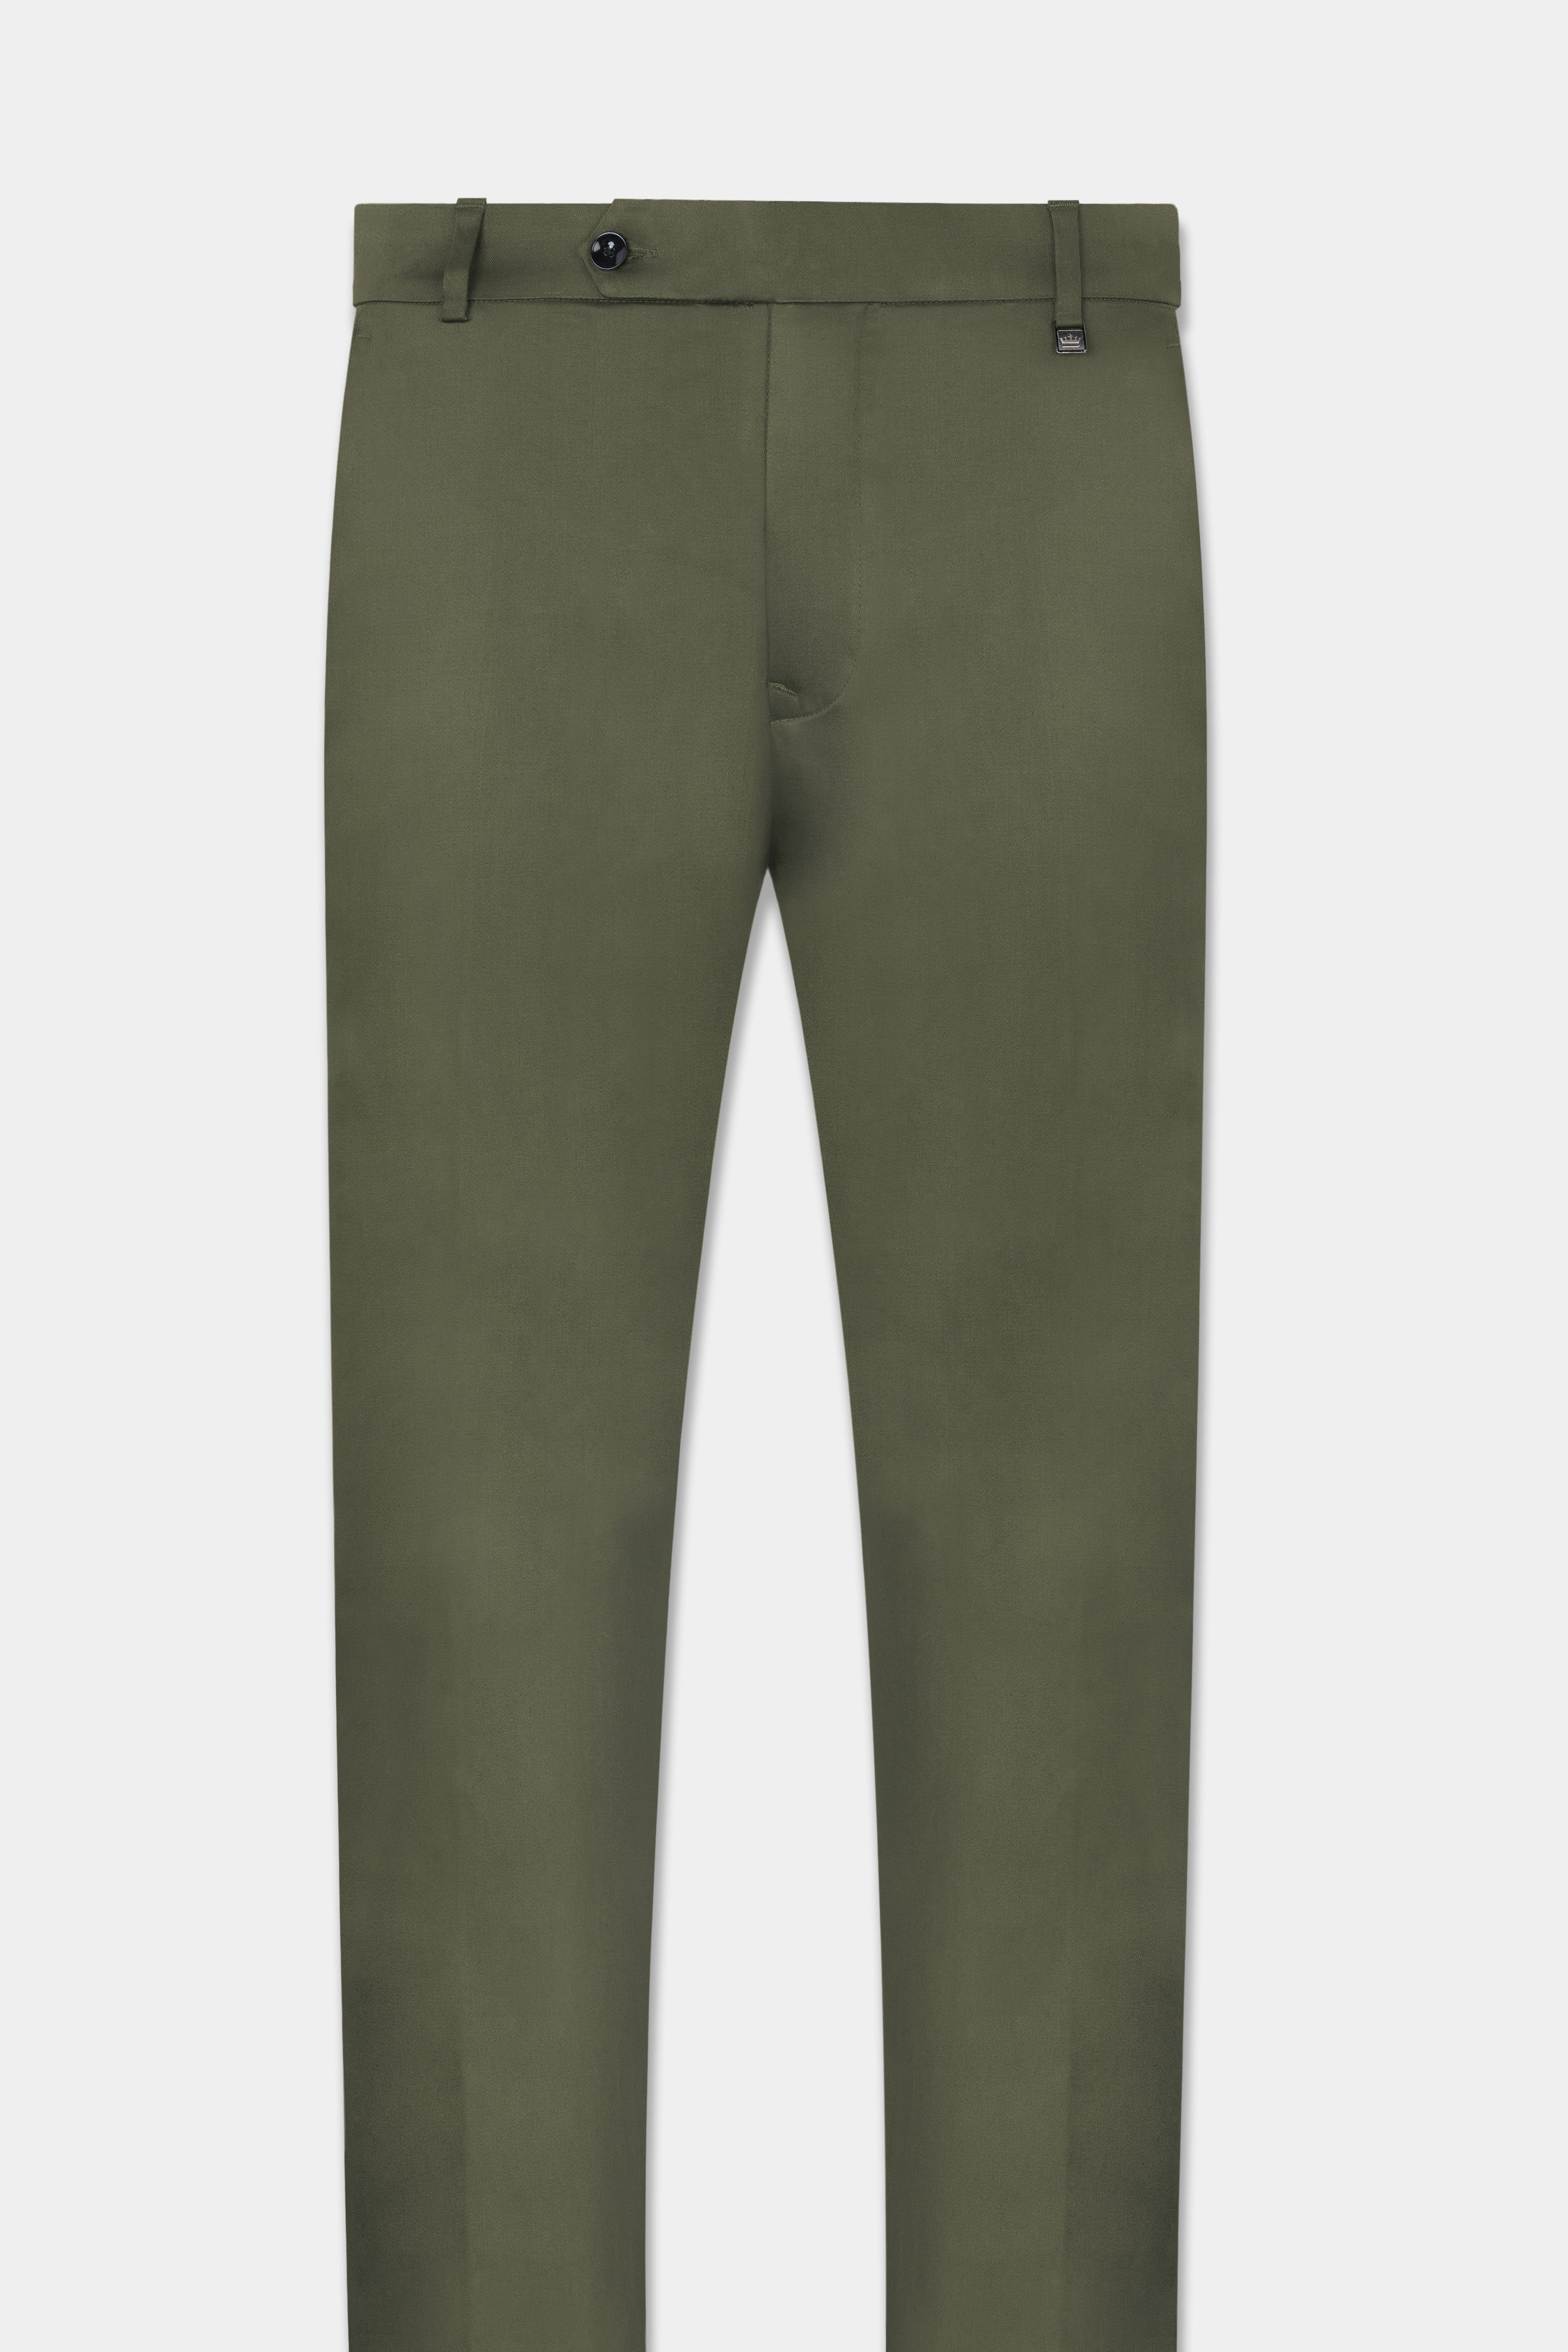 Men Green Premium Cotton Trouser, Formal Office Pant